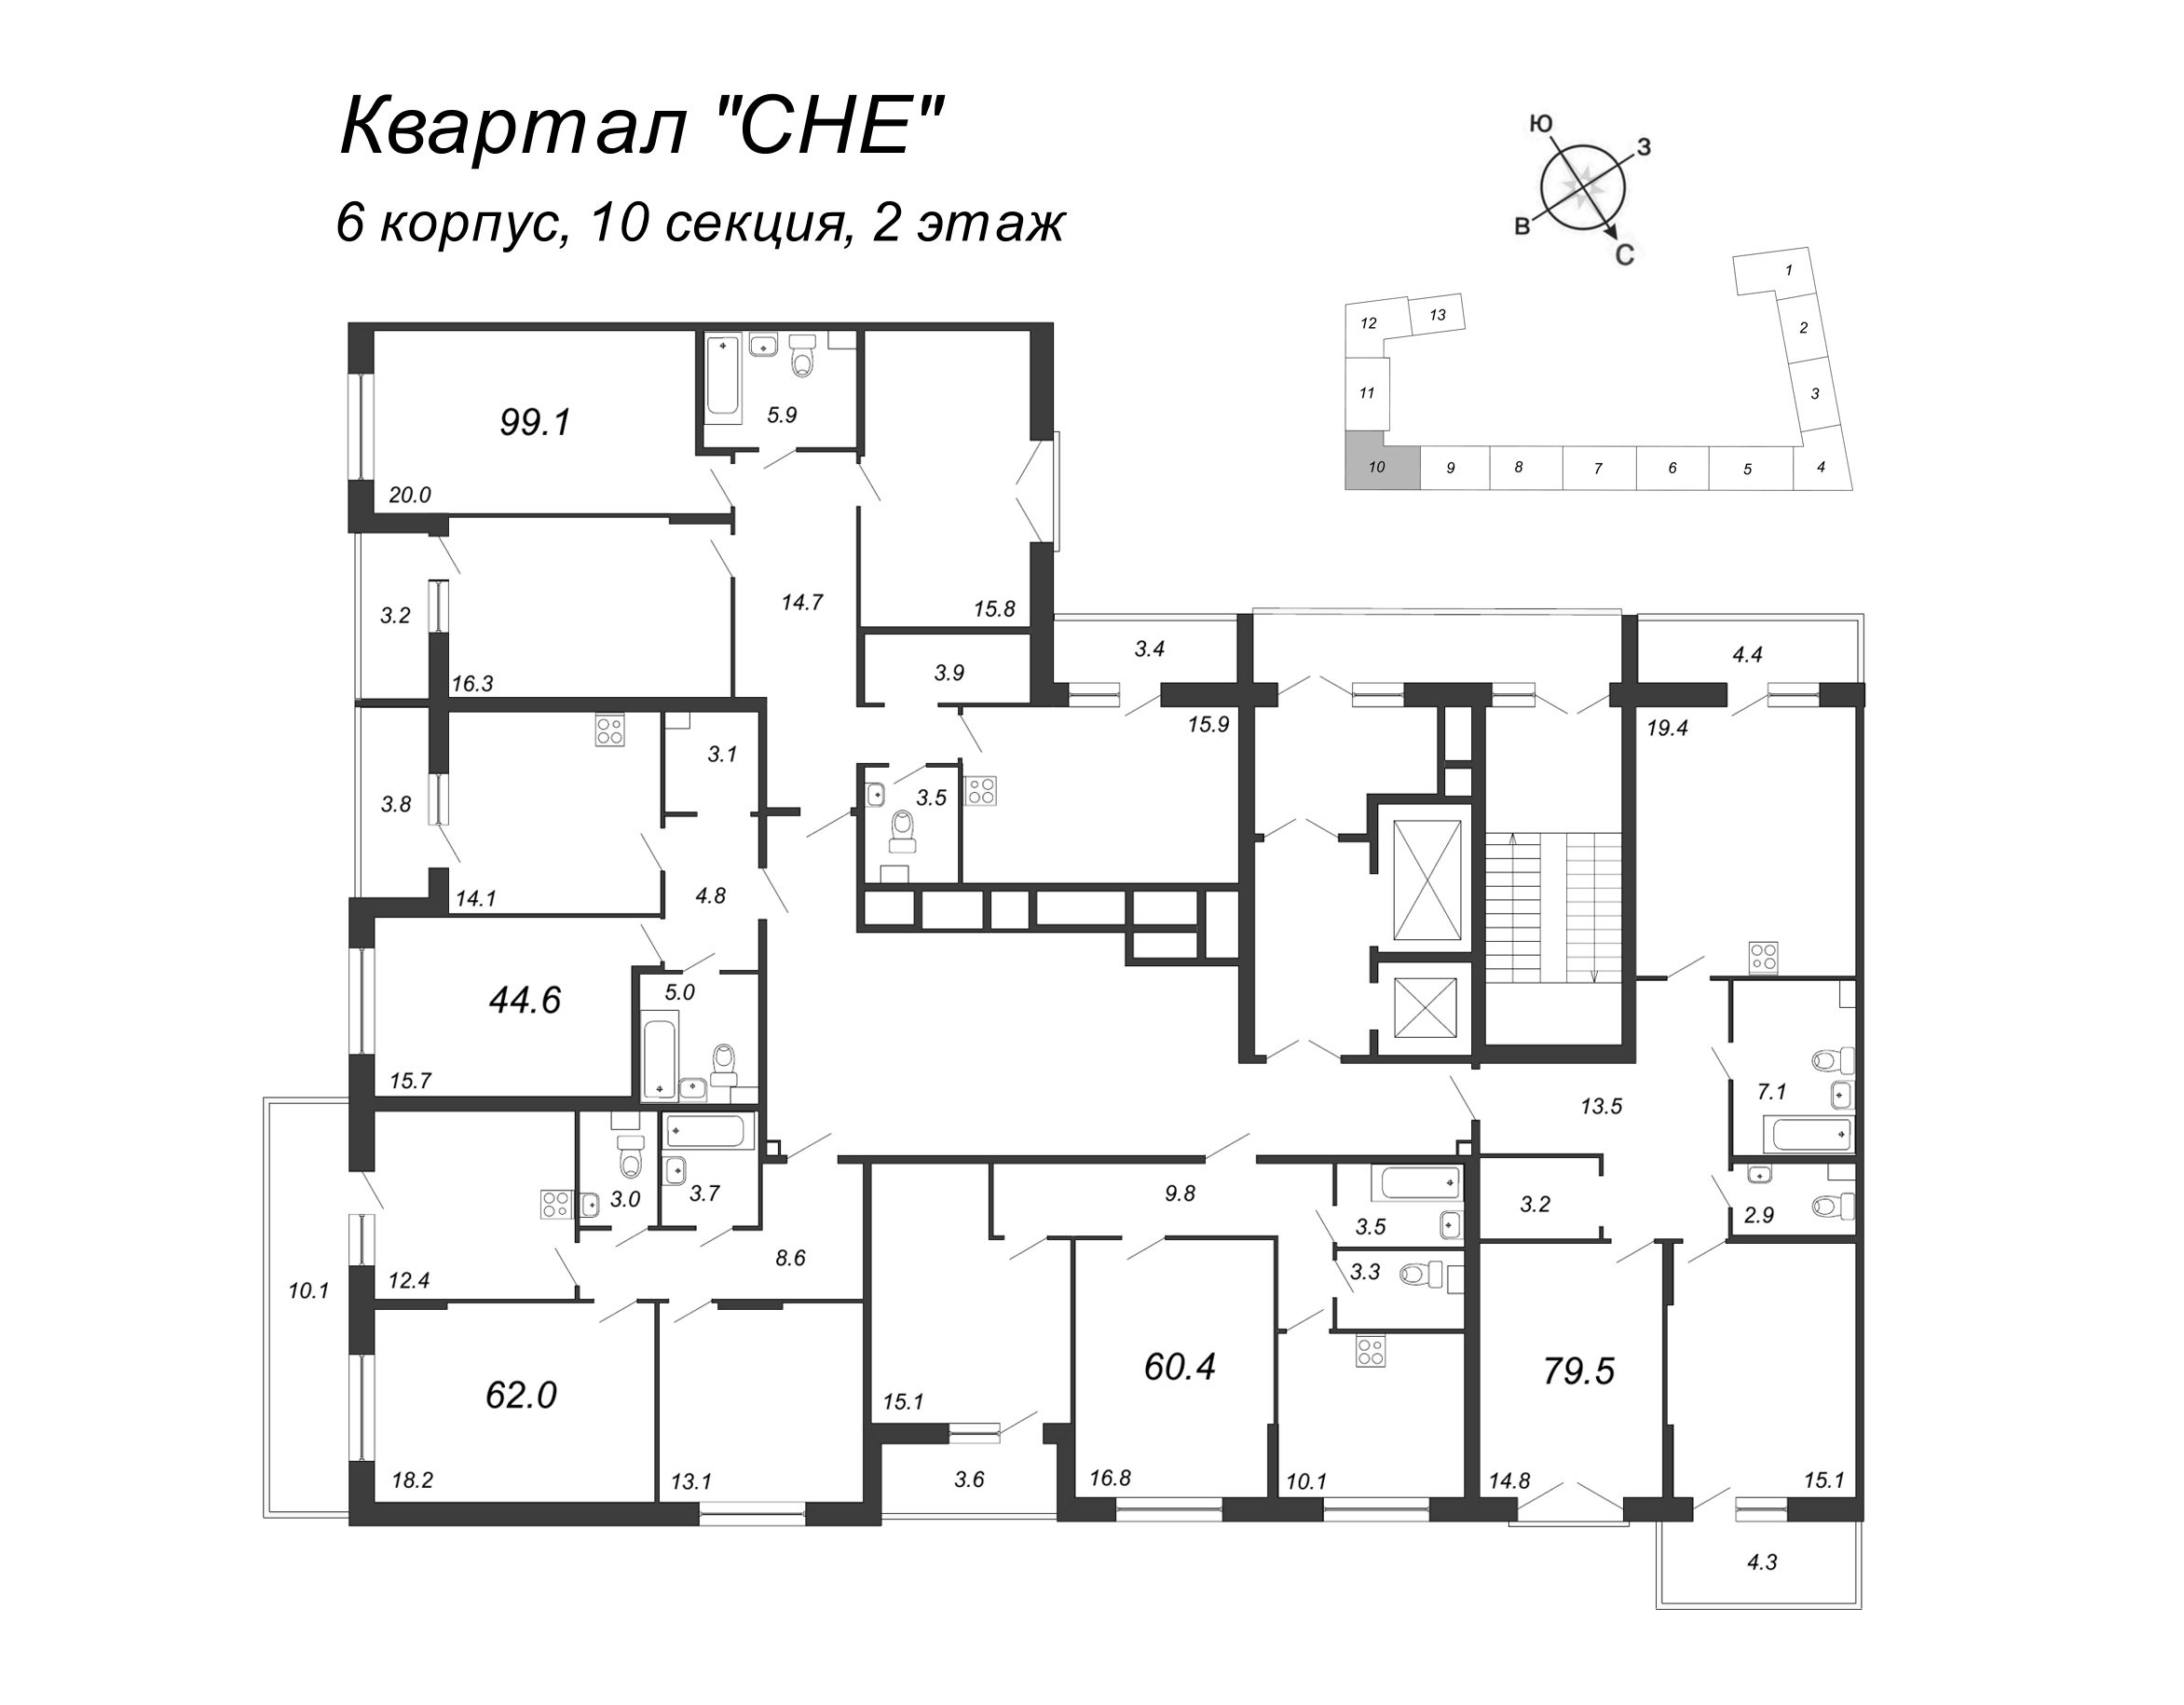 3-комнатная квартира, 101.4 м² в ЖК "Квартал Che" - планировка этажа